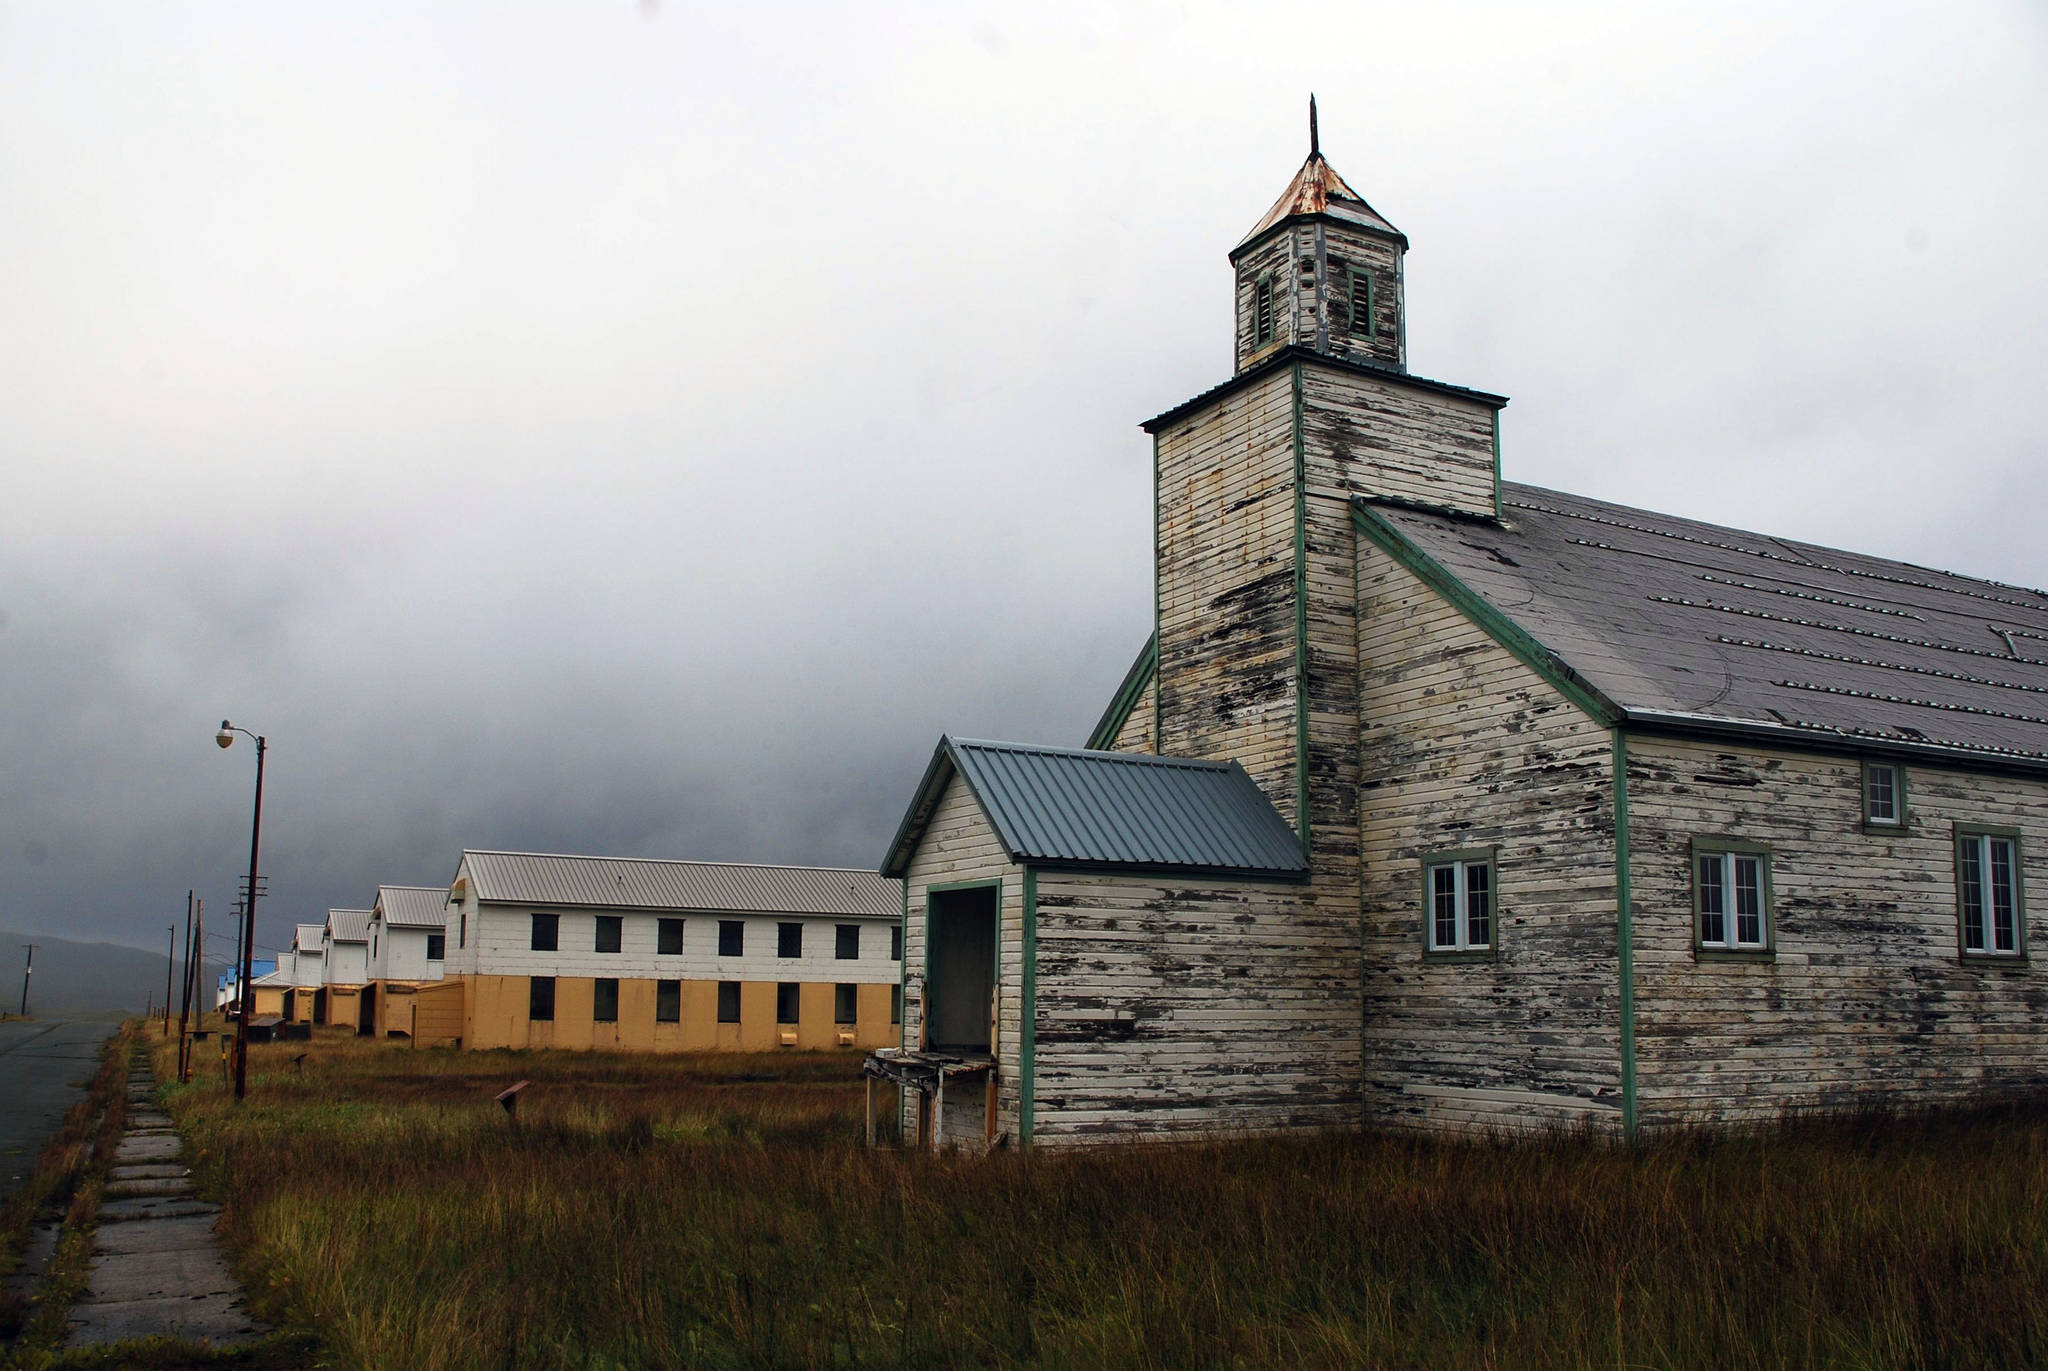 ‘Weird, eerie’ photos of Alaska’s old abandoned buildings on display in Juneau